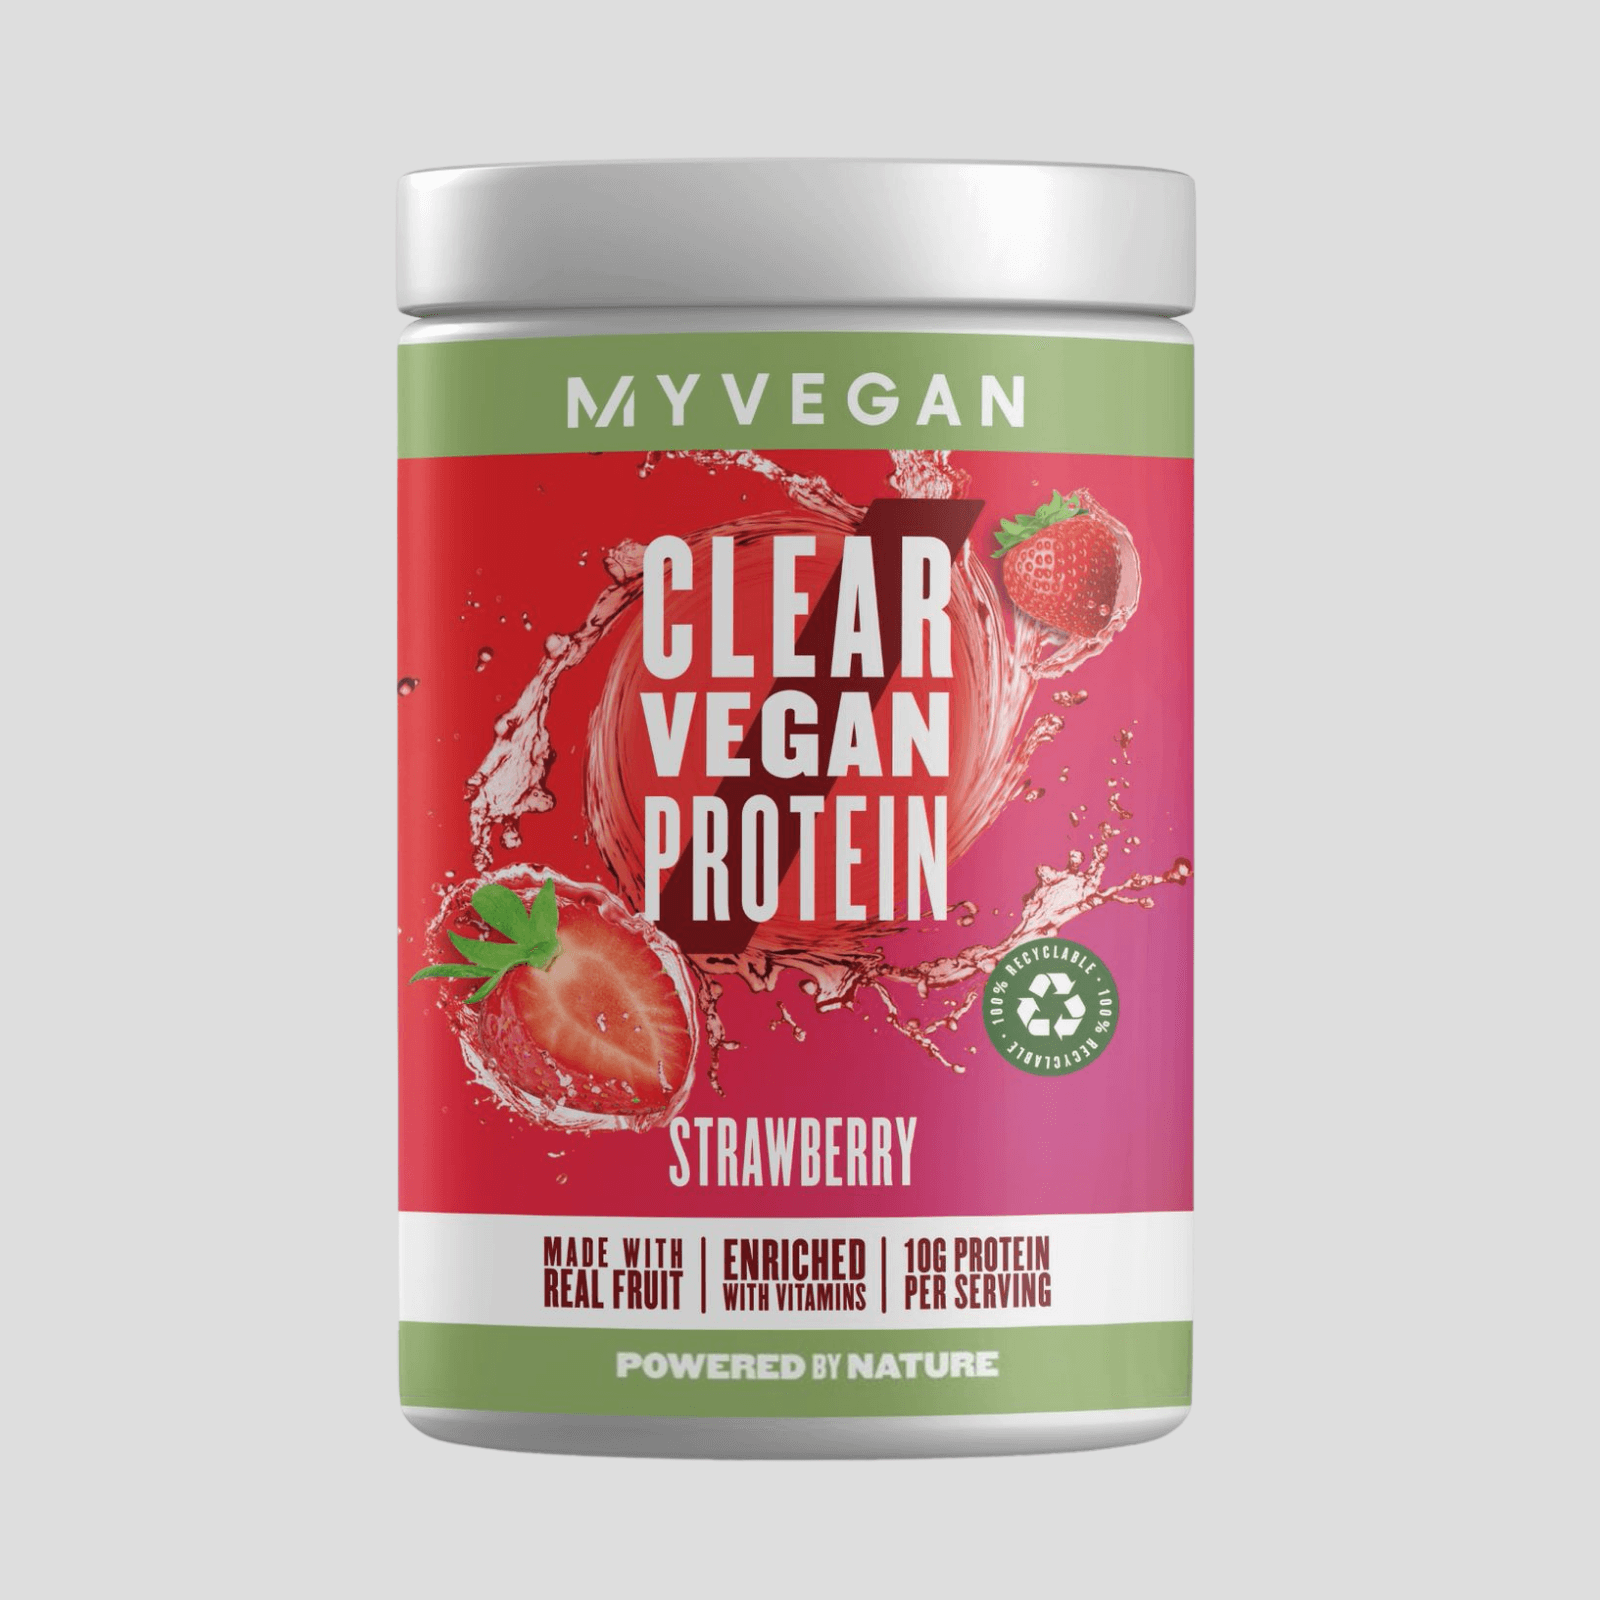 Myvegan UK Myvegan Clear Vegan Protein - 20servings - Strawberry